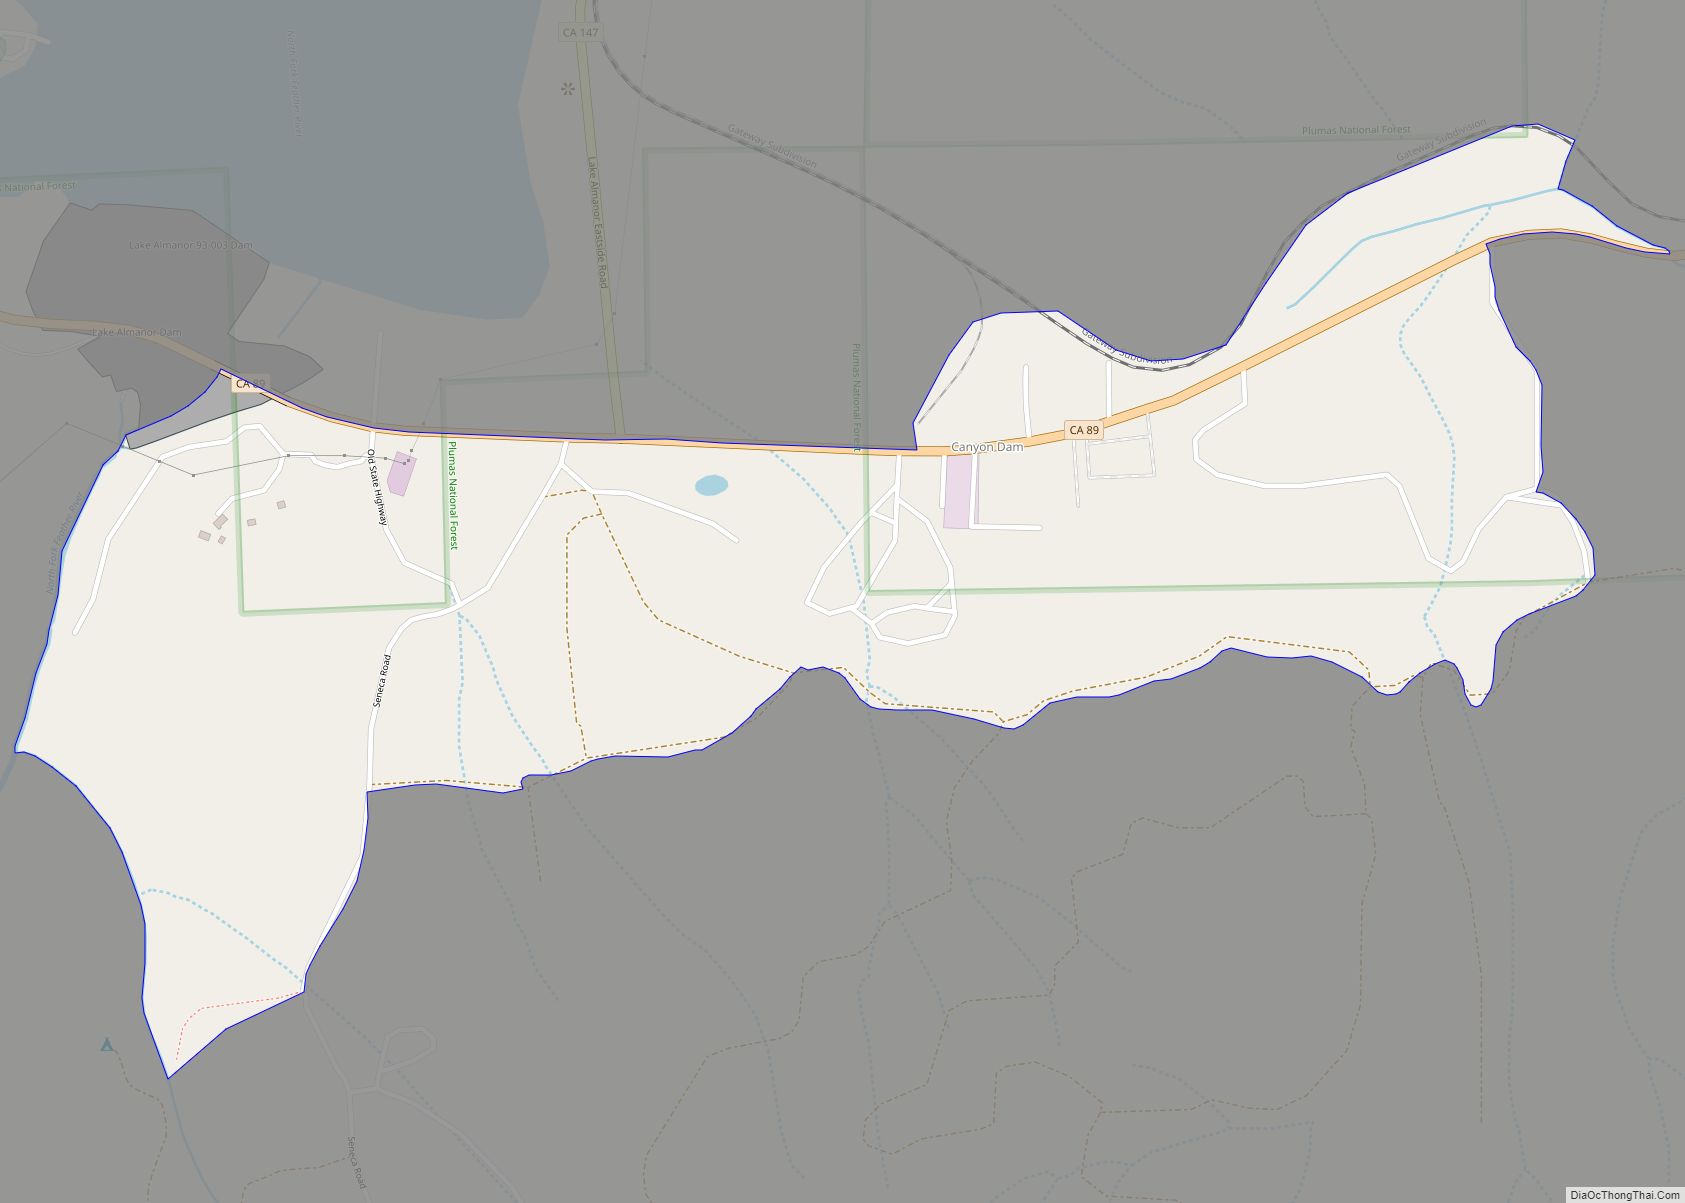 Map of Canyondam CDP